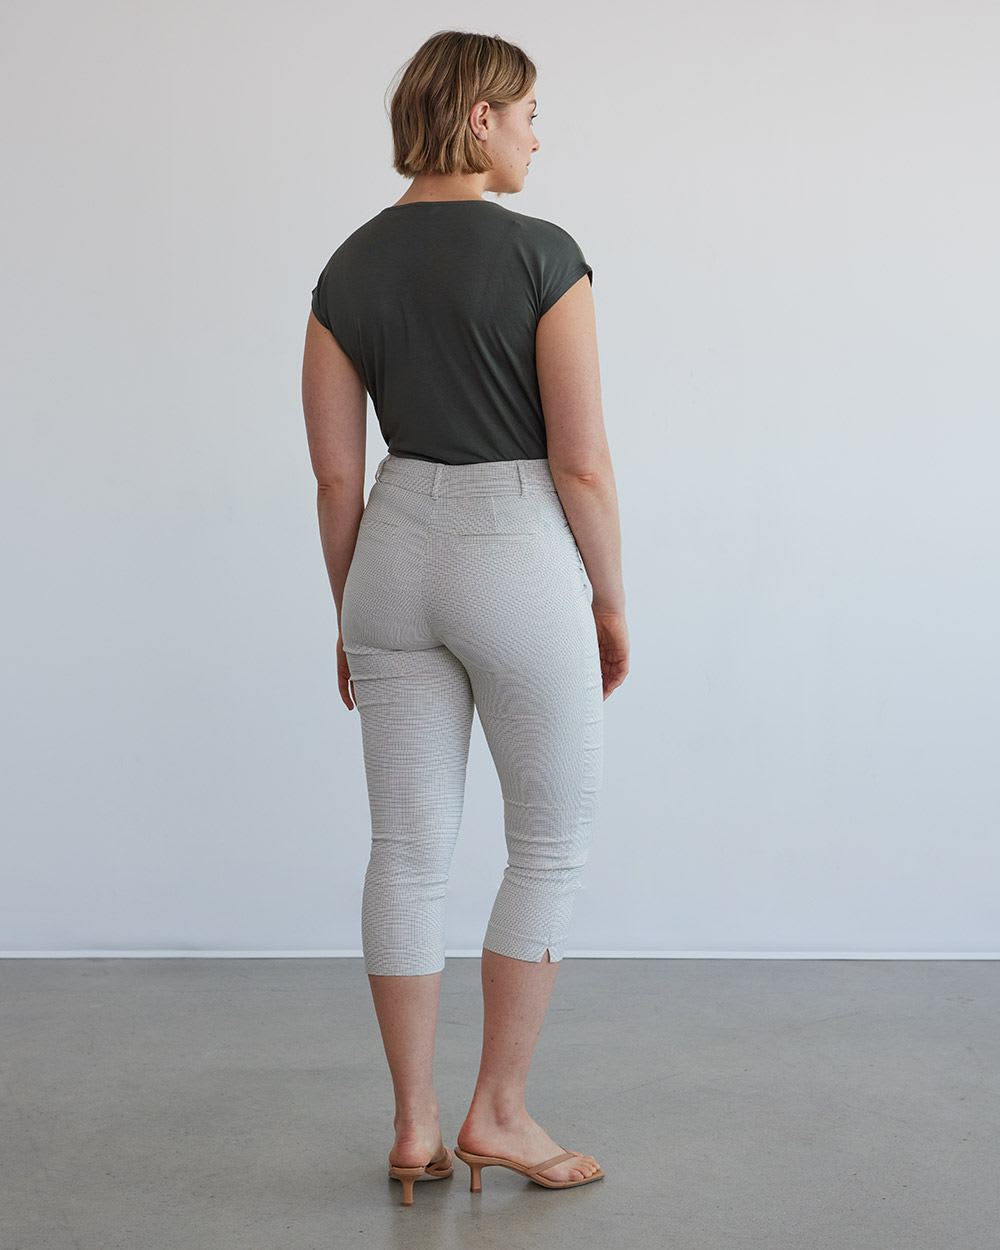 NEW Women Fashion Pants Lace Trim Capri Leggings Slim Fit Trousers